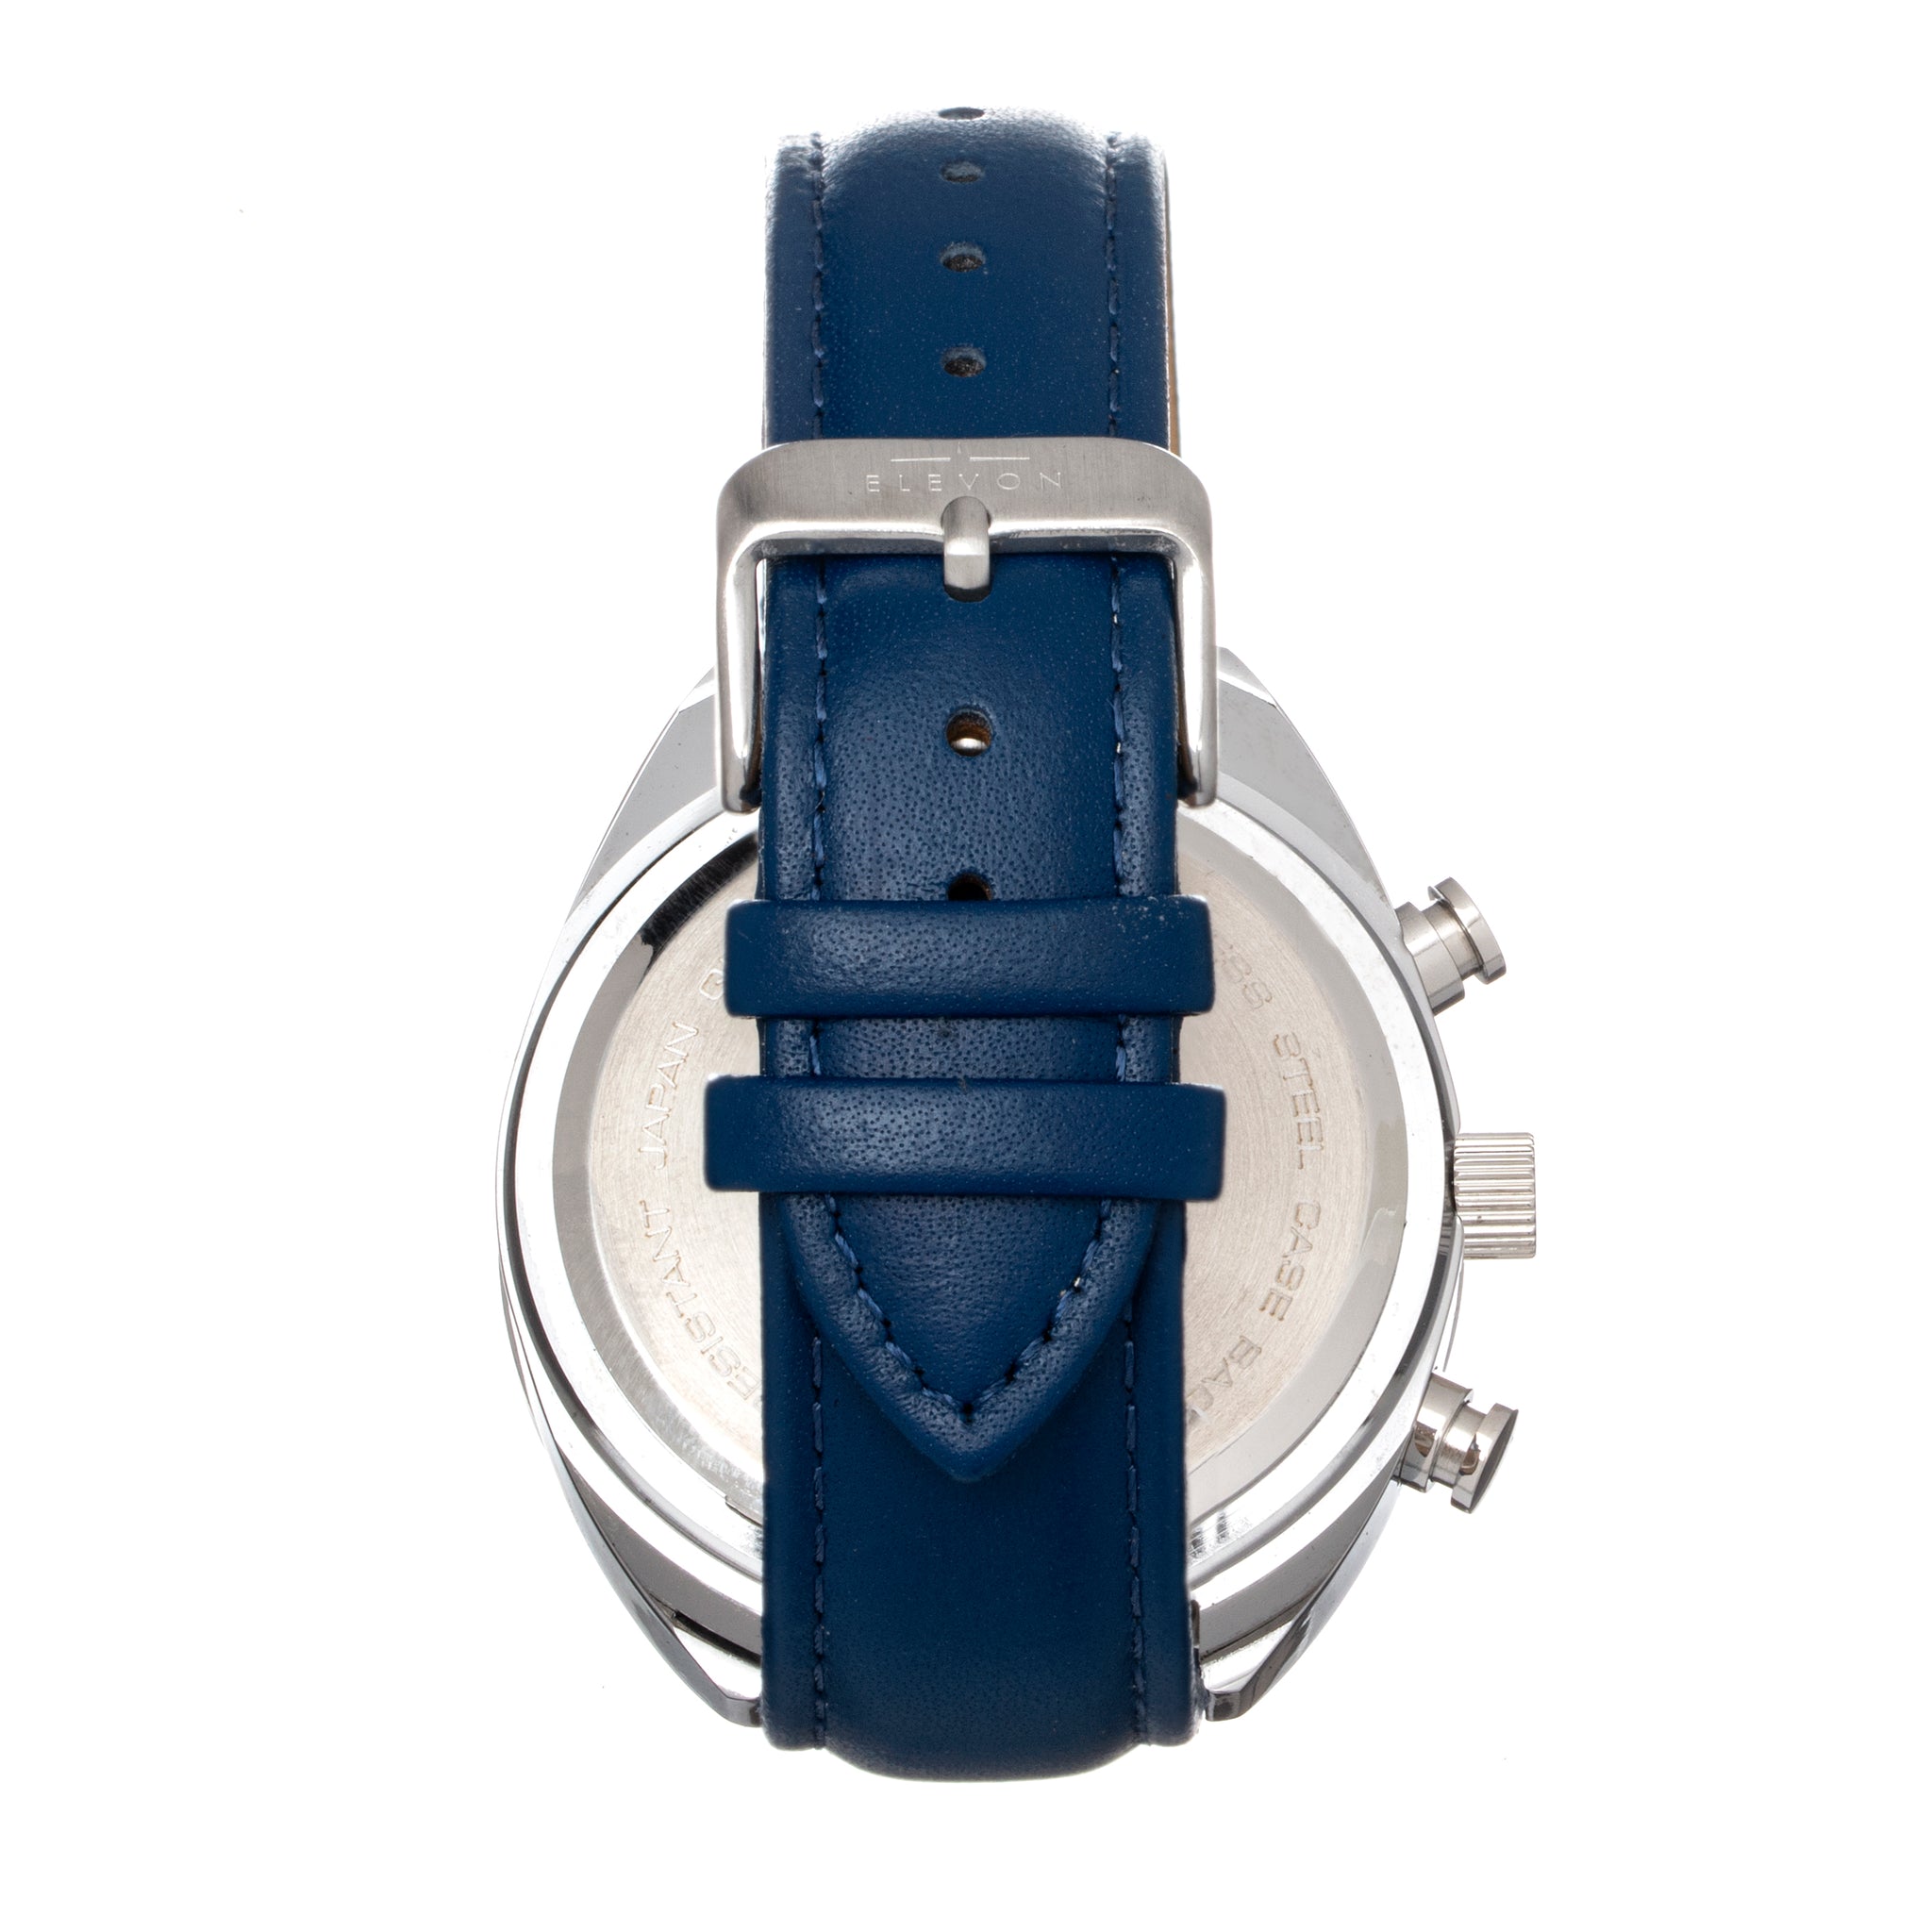 Elevon Bombardier Chronograph Leather-Strap Watch - Navy - ELE127-2